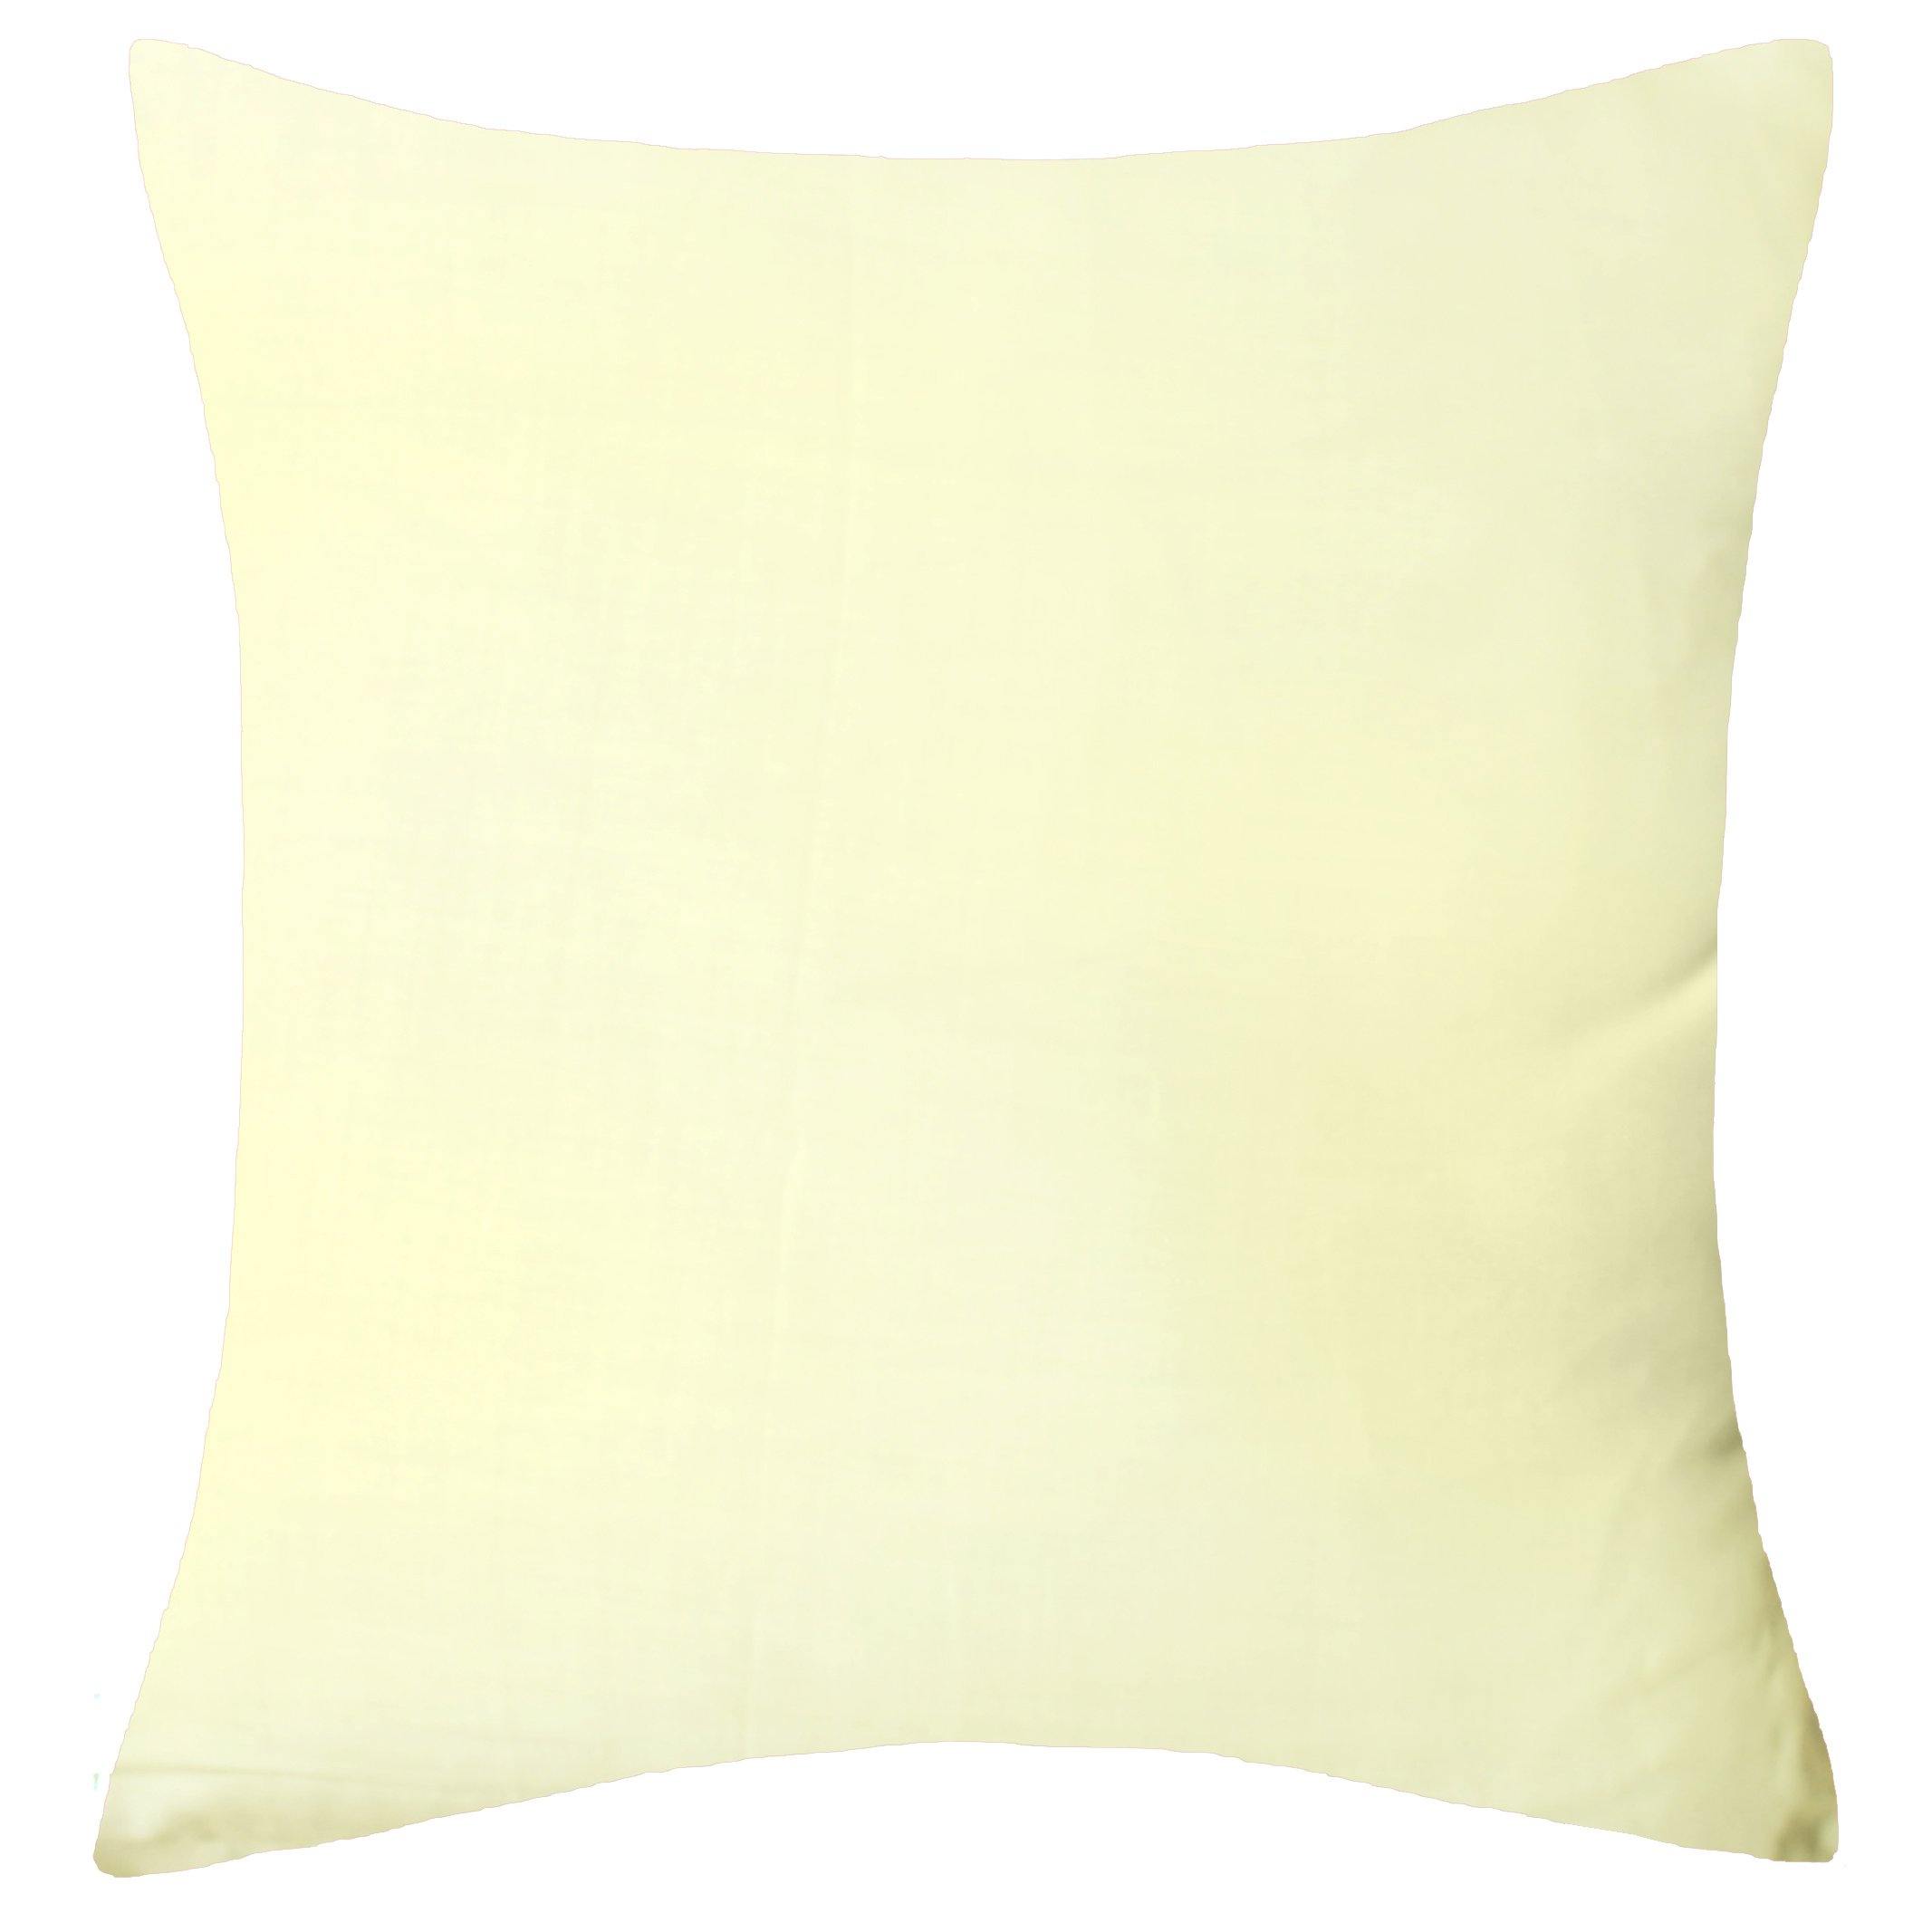 Plain Cream cushion cover-1 piece - DecorStudio - CUSHIONS